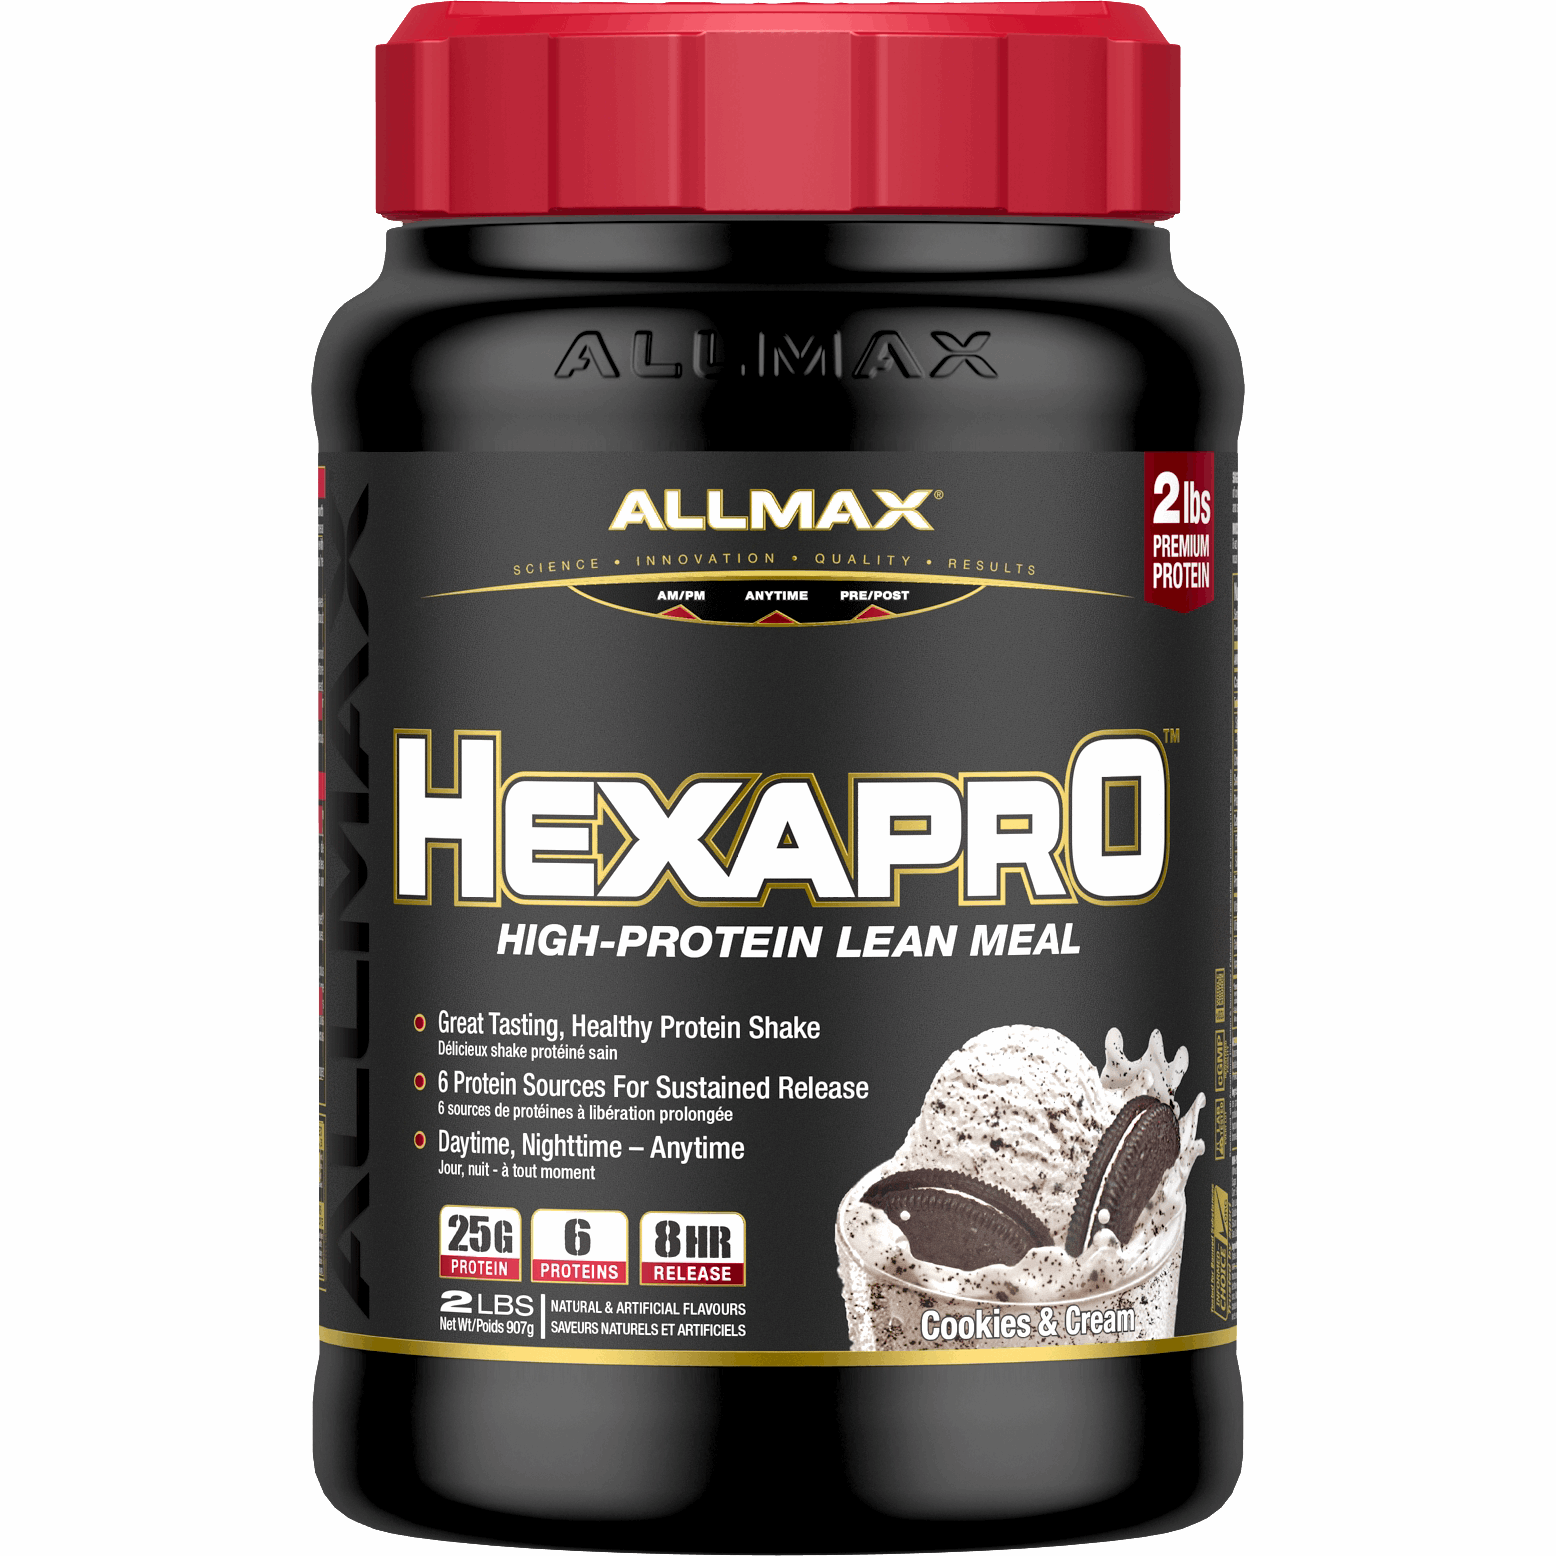 ALLMAX Hexapro 2lbs Allmax Nutrition Top Nutrition Canada